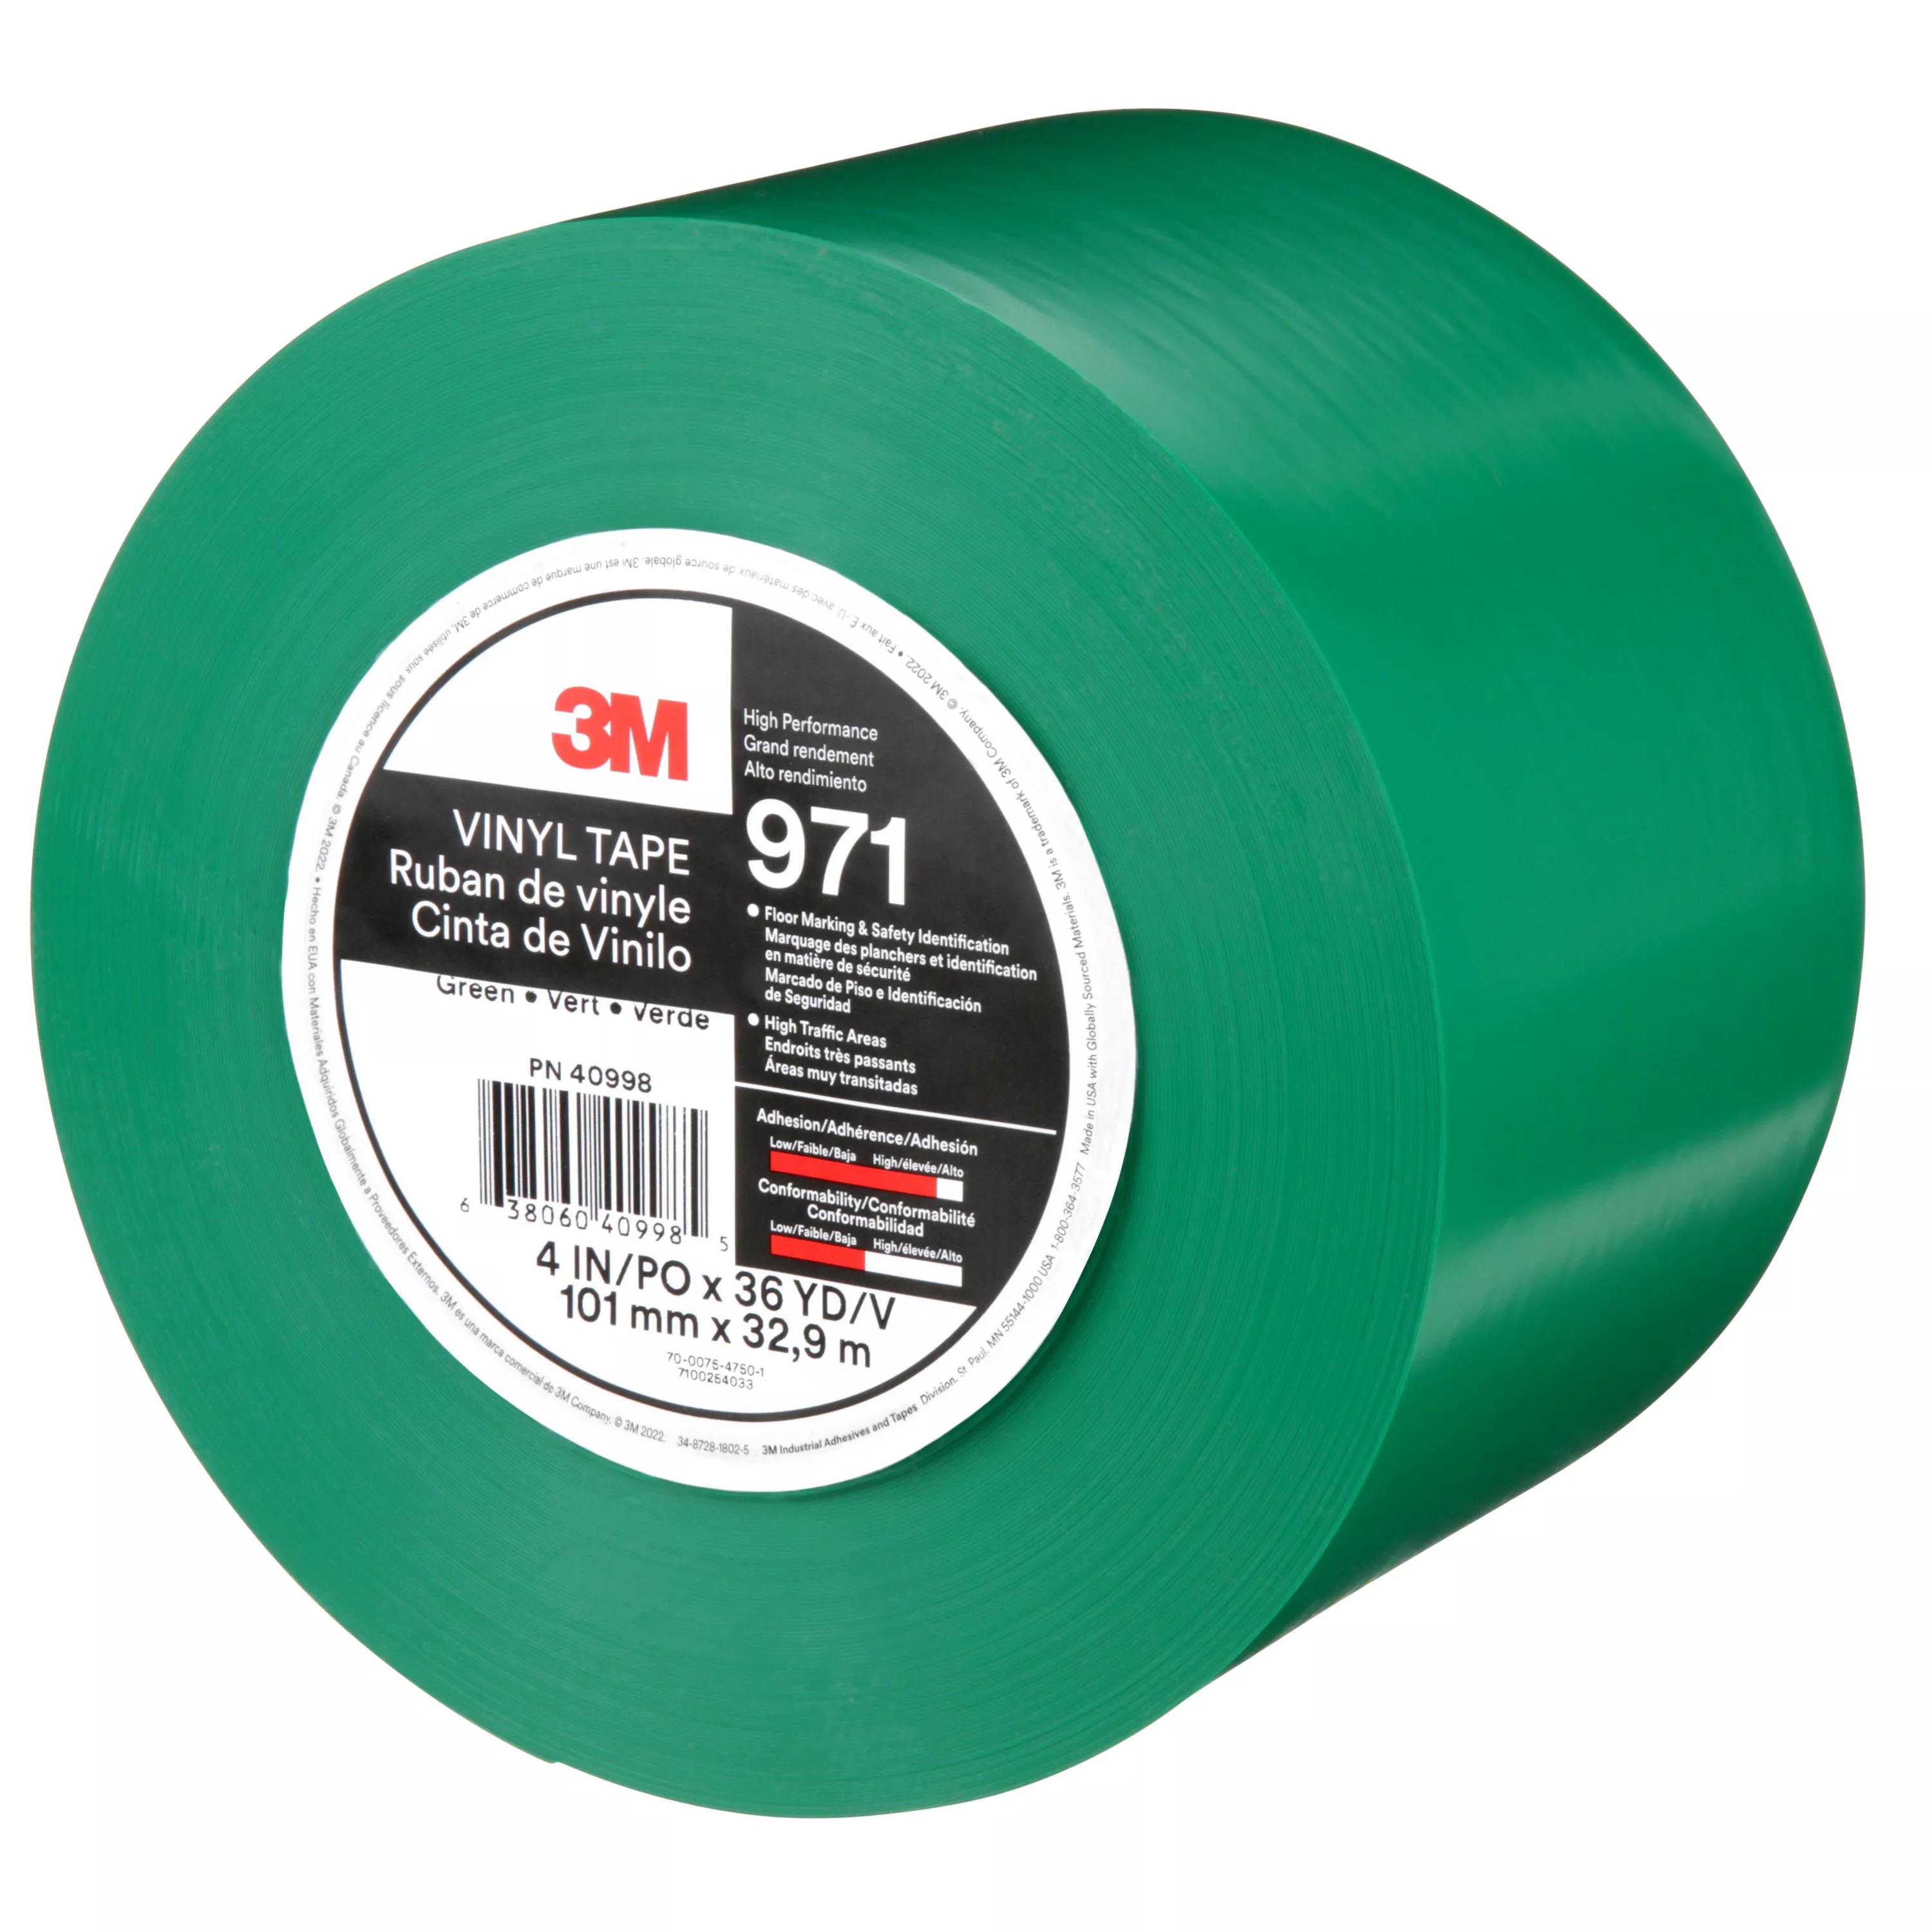 SKU 7100254033 | 3M™ Durable Floor Marking Tape 971